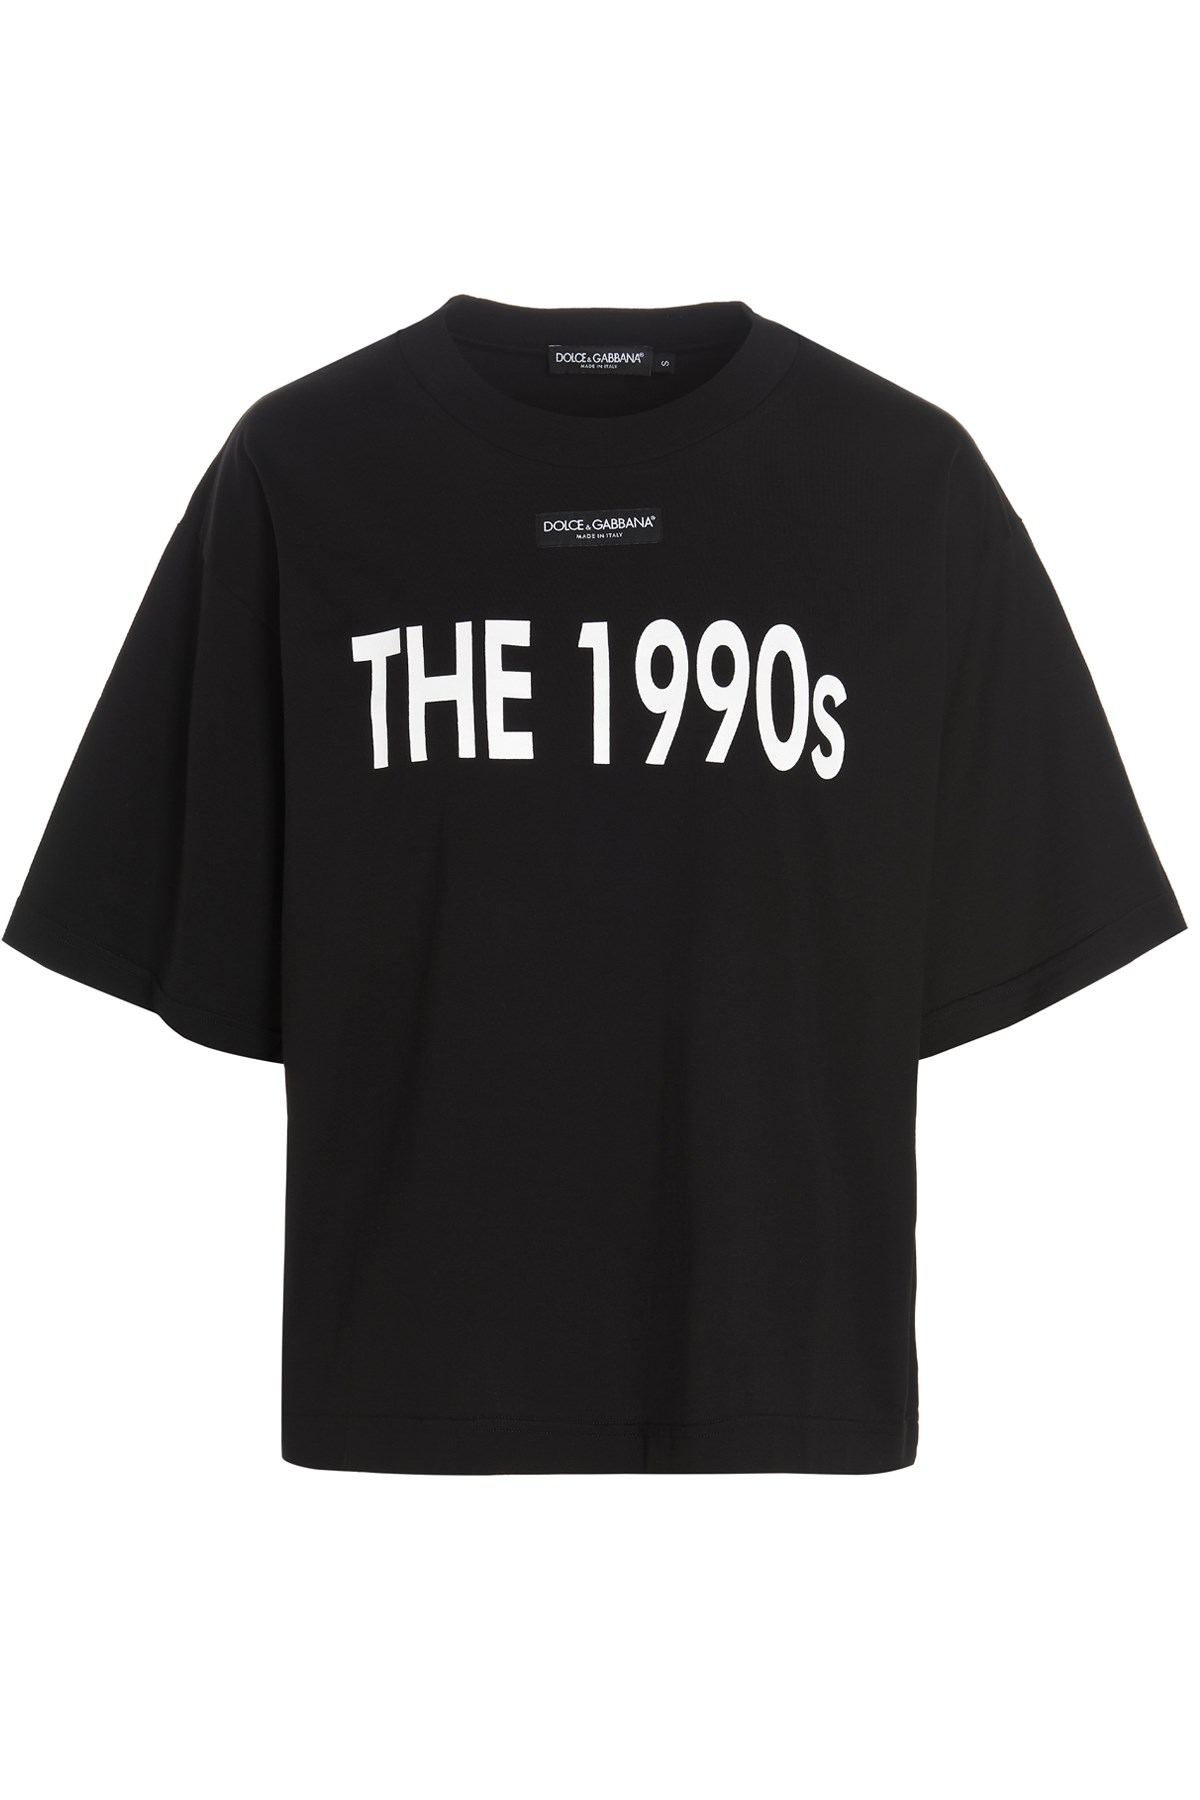 DOLCE & GABBANA '90S' Printed T-Shirt